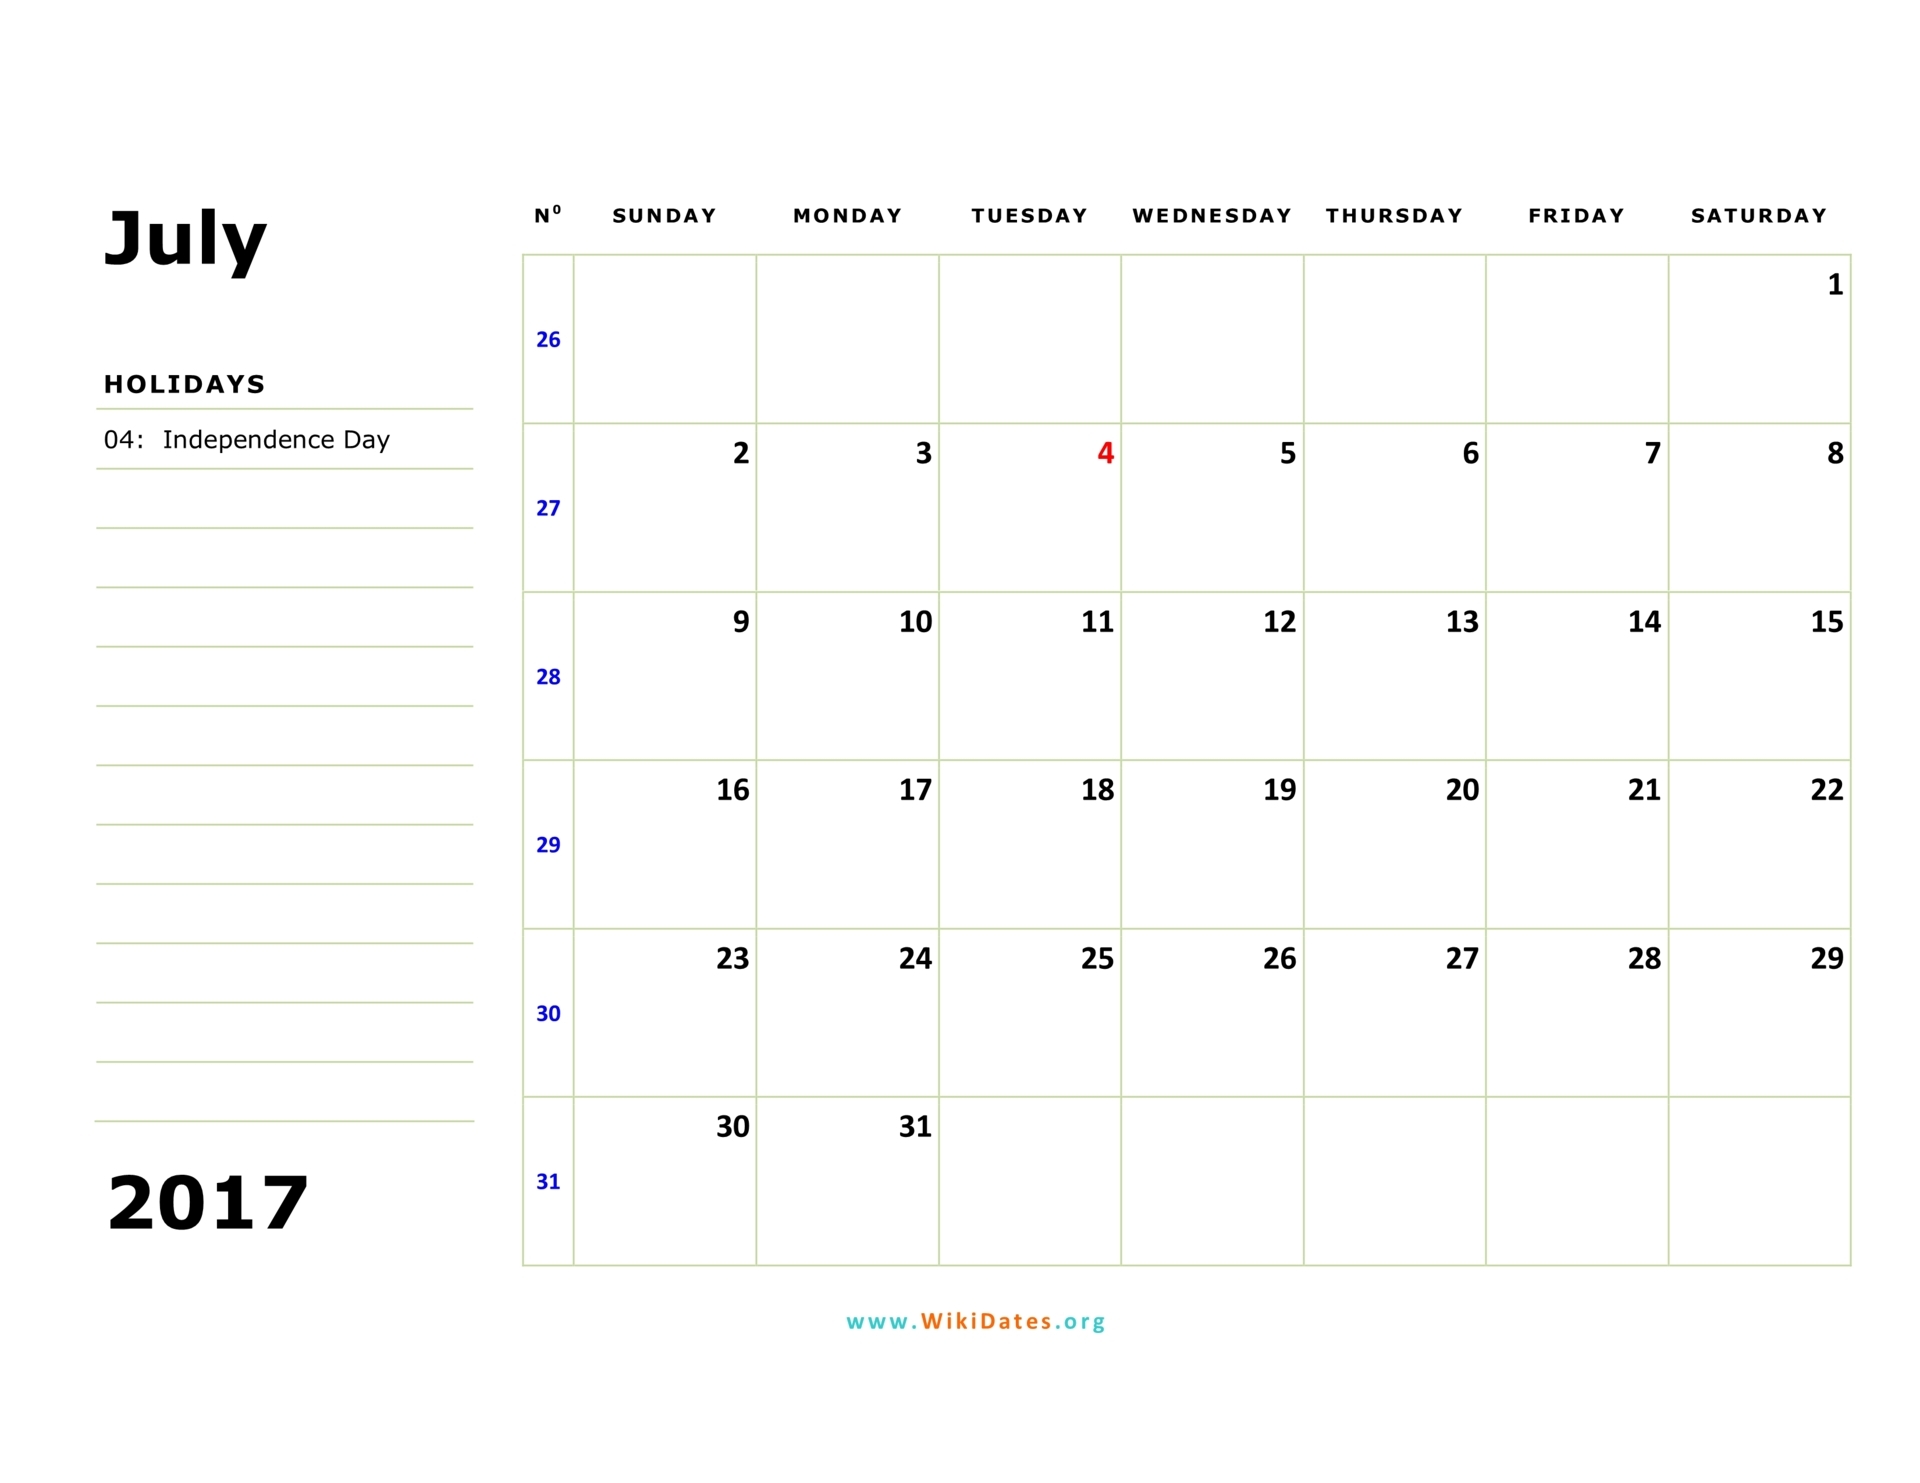 july-2017-calendar-holidays-bizarre-unique-special-holiday-days-national-day-calendar-daily